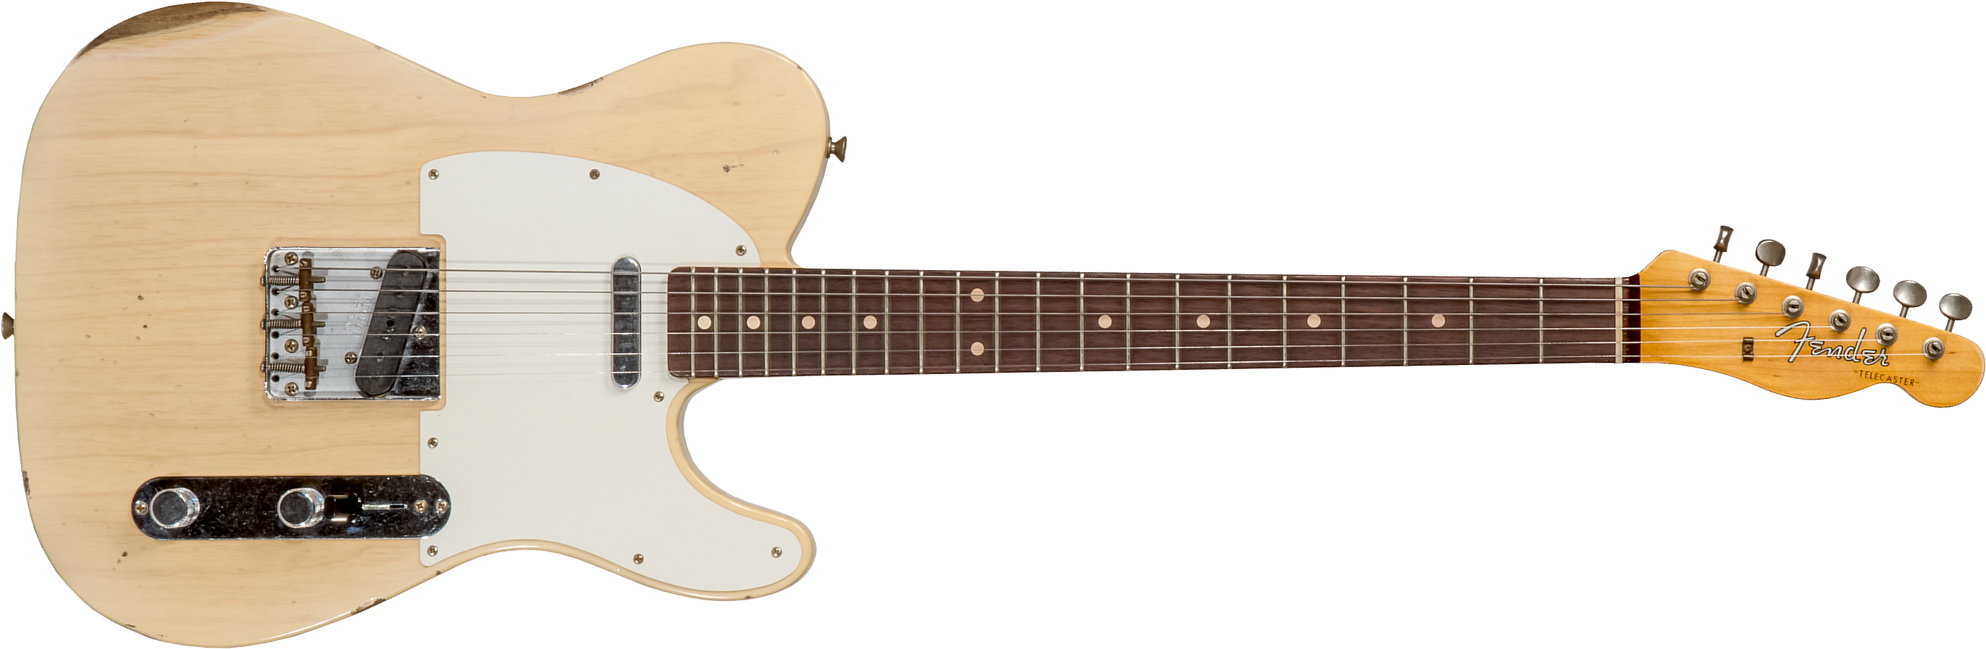 Fender Custom Shop Tele 1960 2s Ht Rw #cz569492 - Relic Natural Blonde - Televorm elektrische gitaar - Main picture